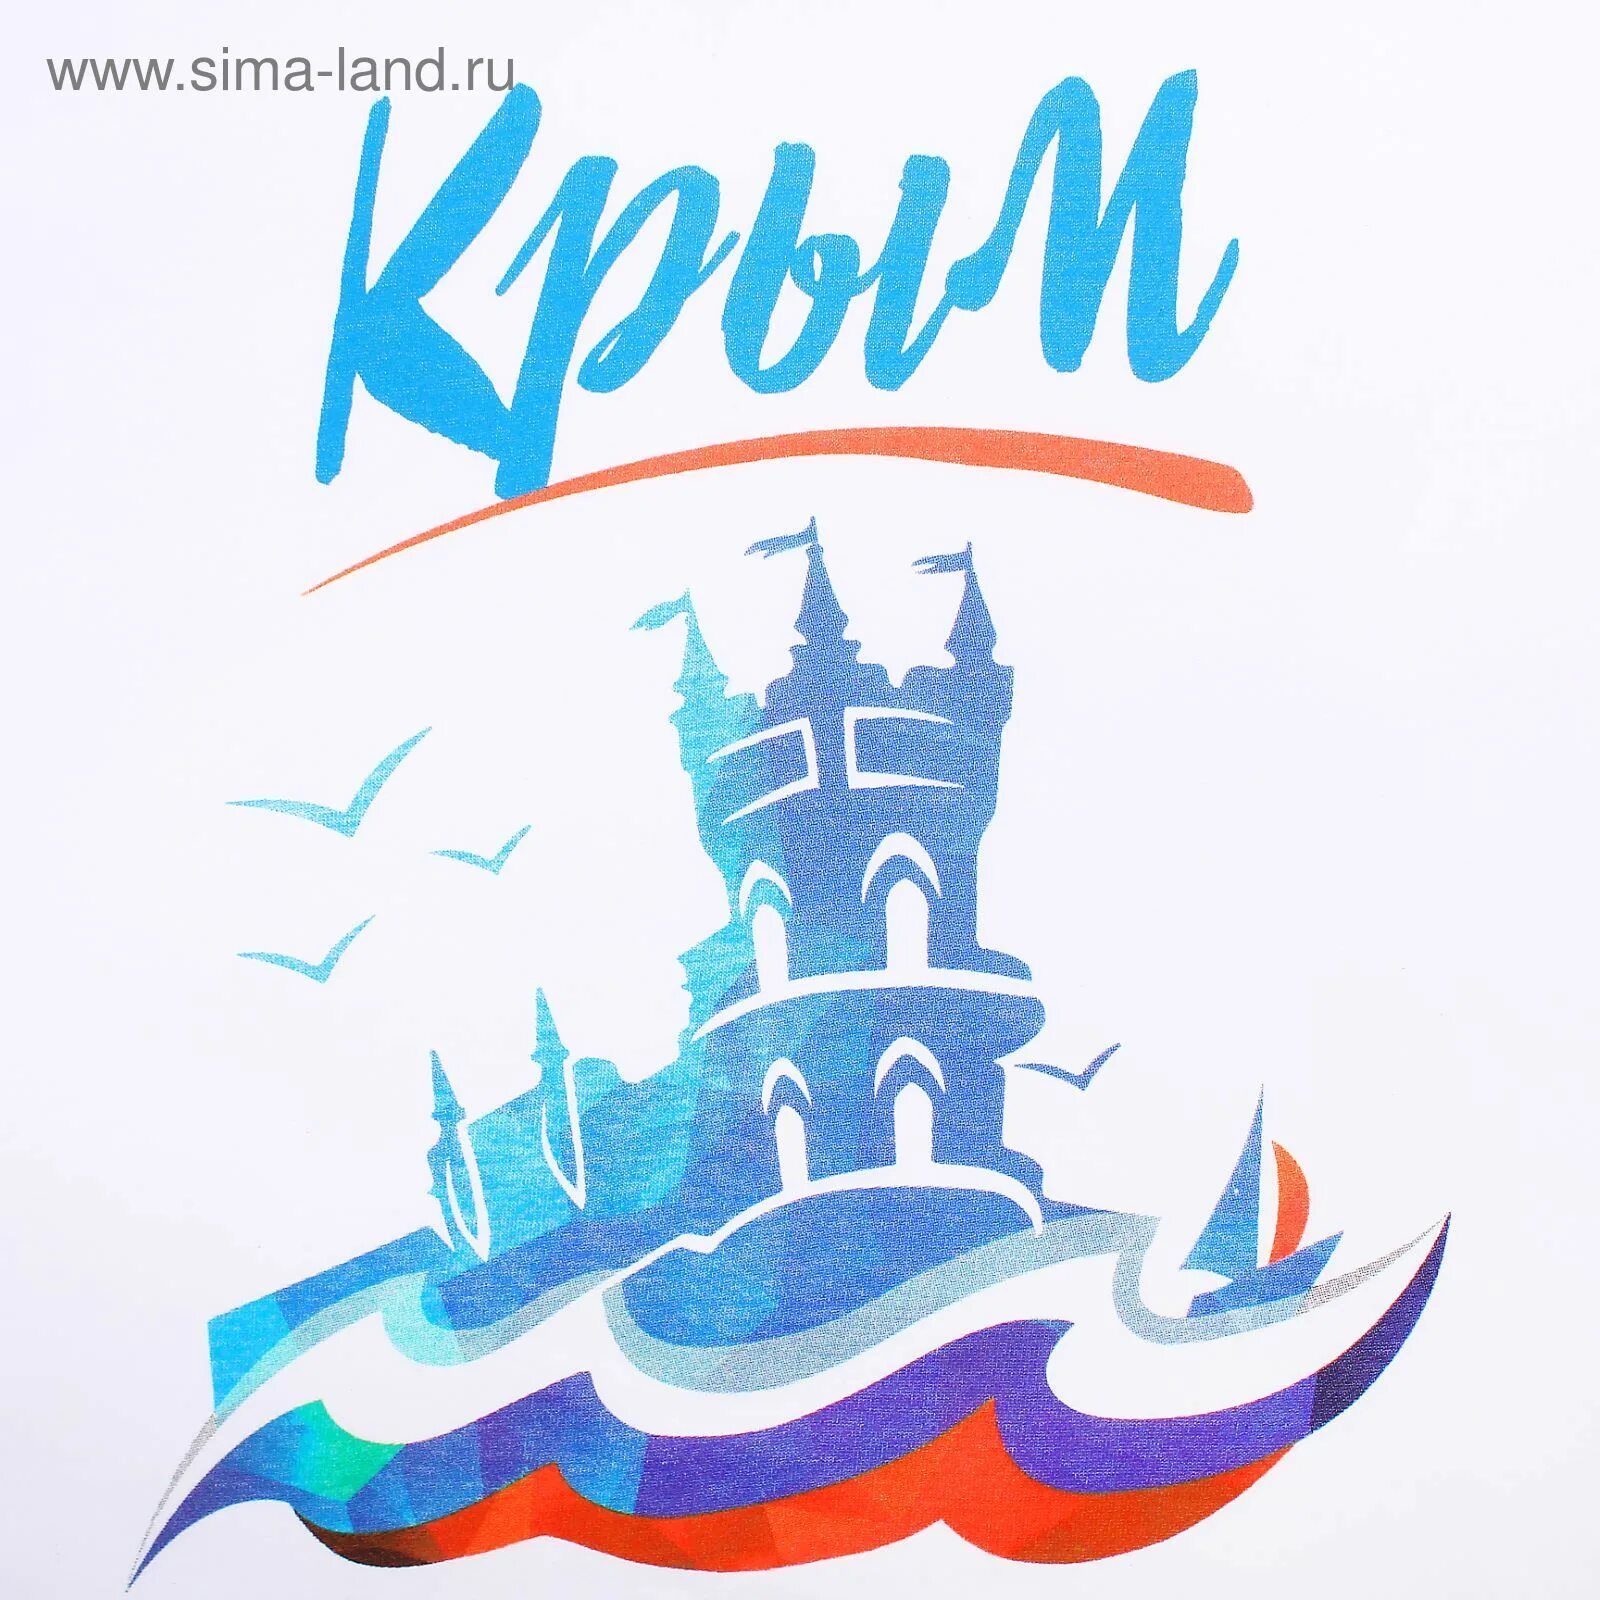 Joyful Crimea, I love coloring